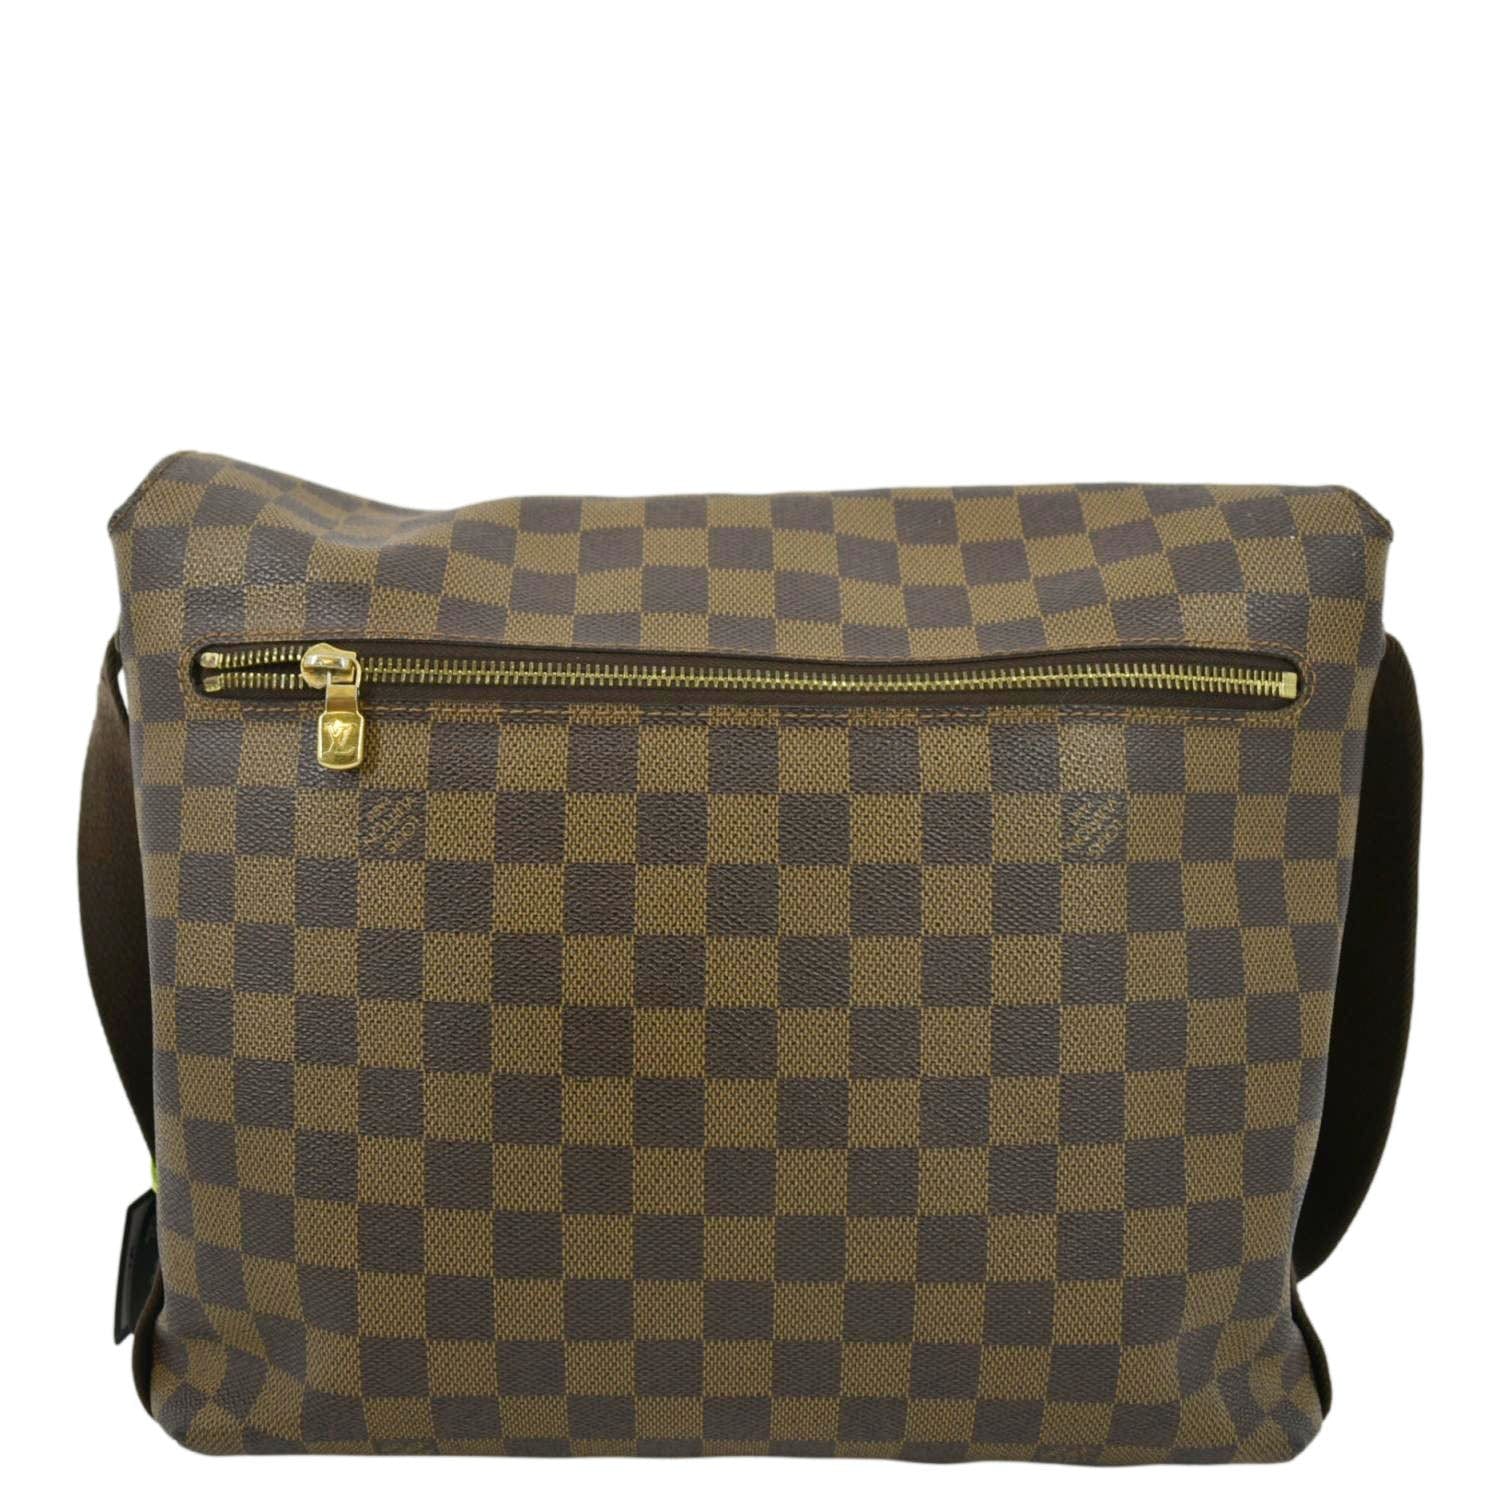 Louis Vuitton Brooklyn MM Damier Ebene Canvas Leather Shoulder Bag